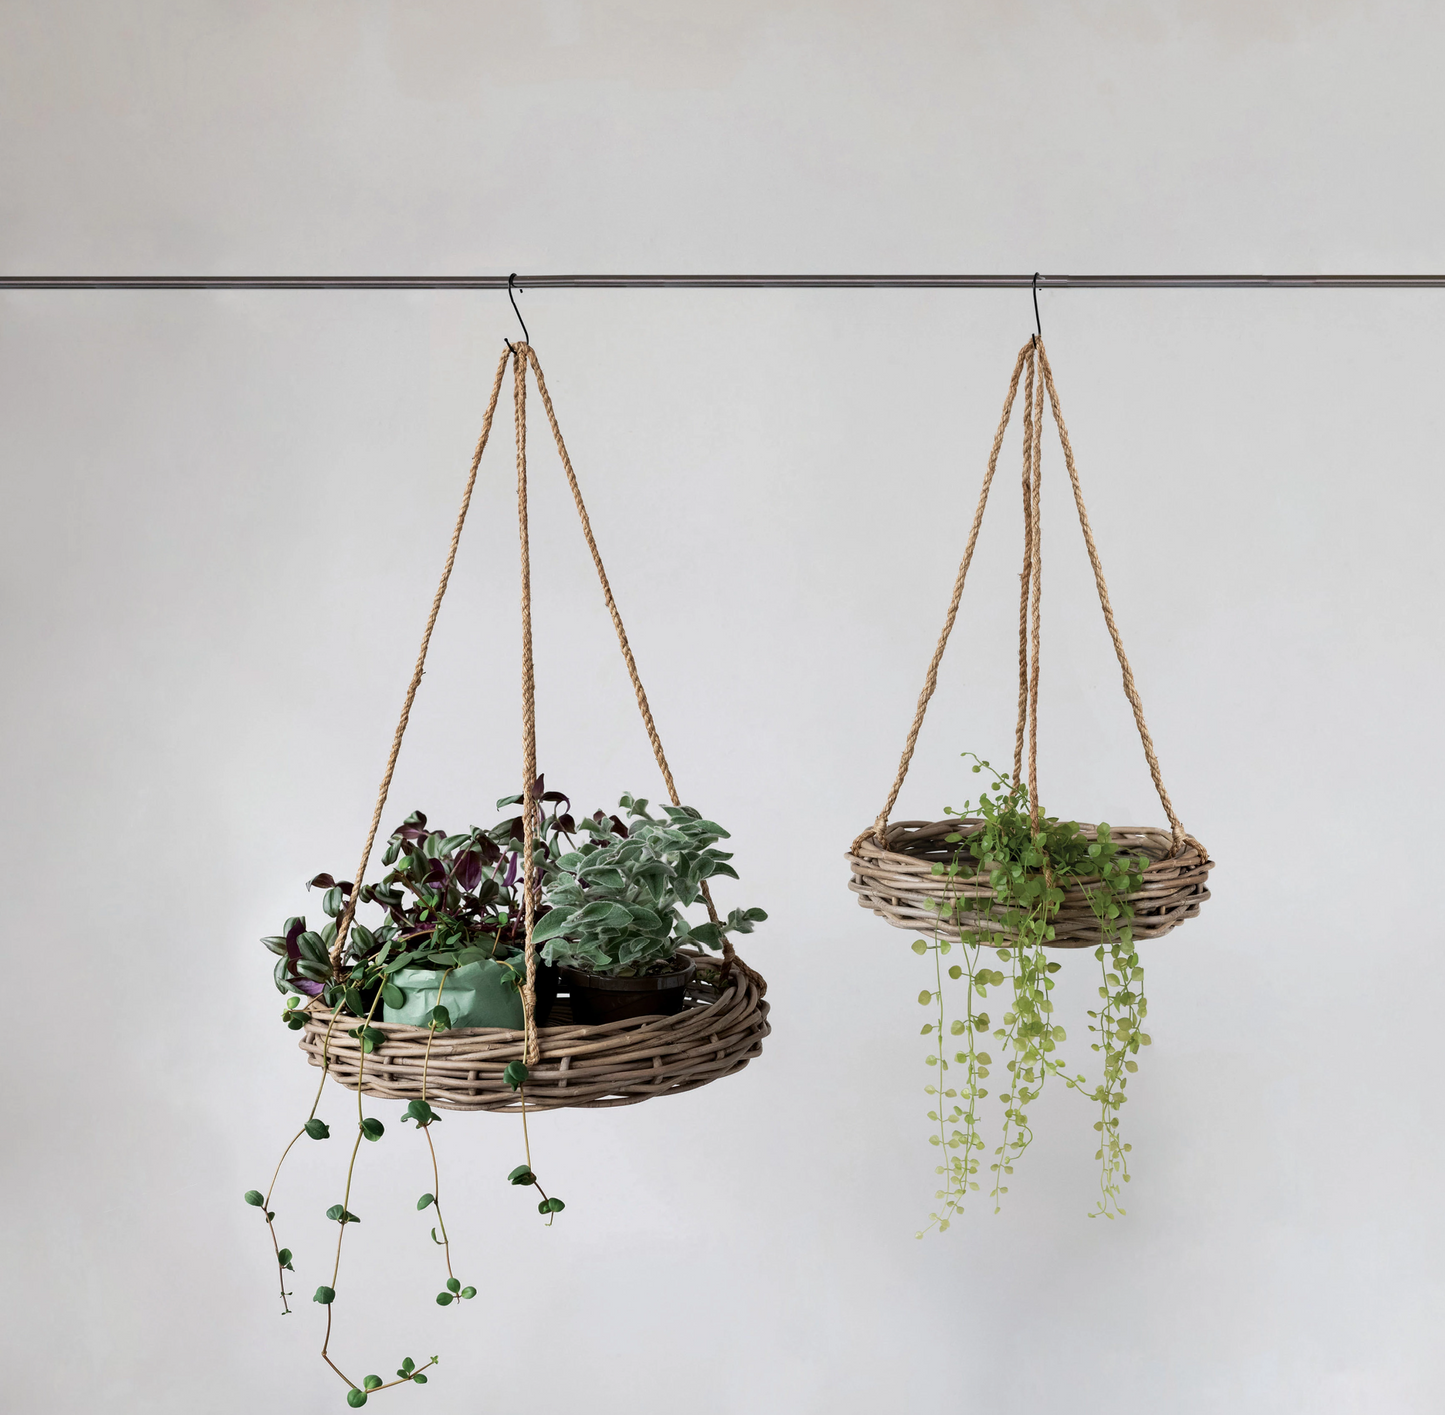 Hand-Woven Hanging Rattan Baskets